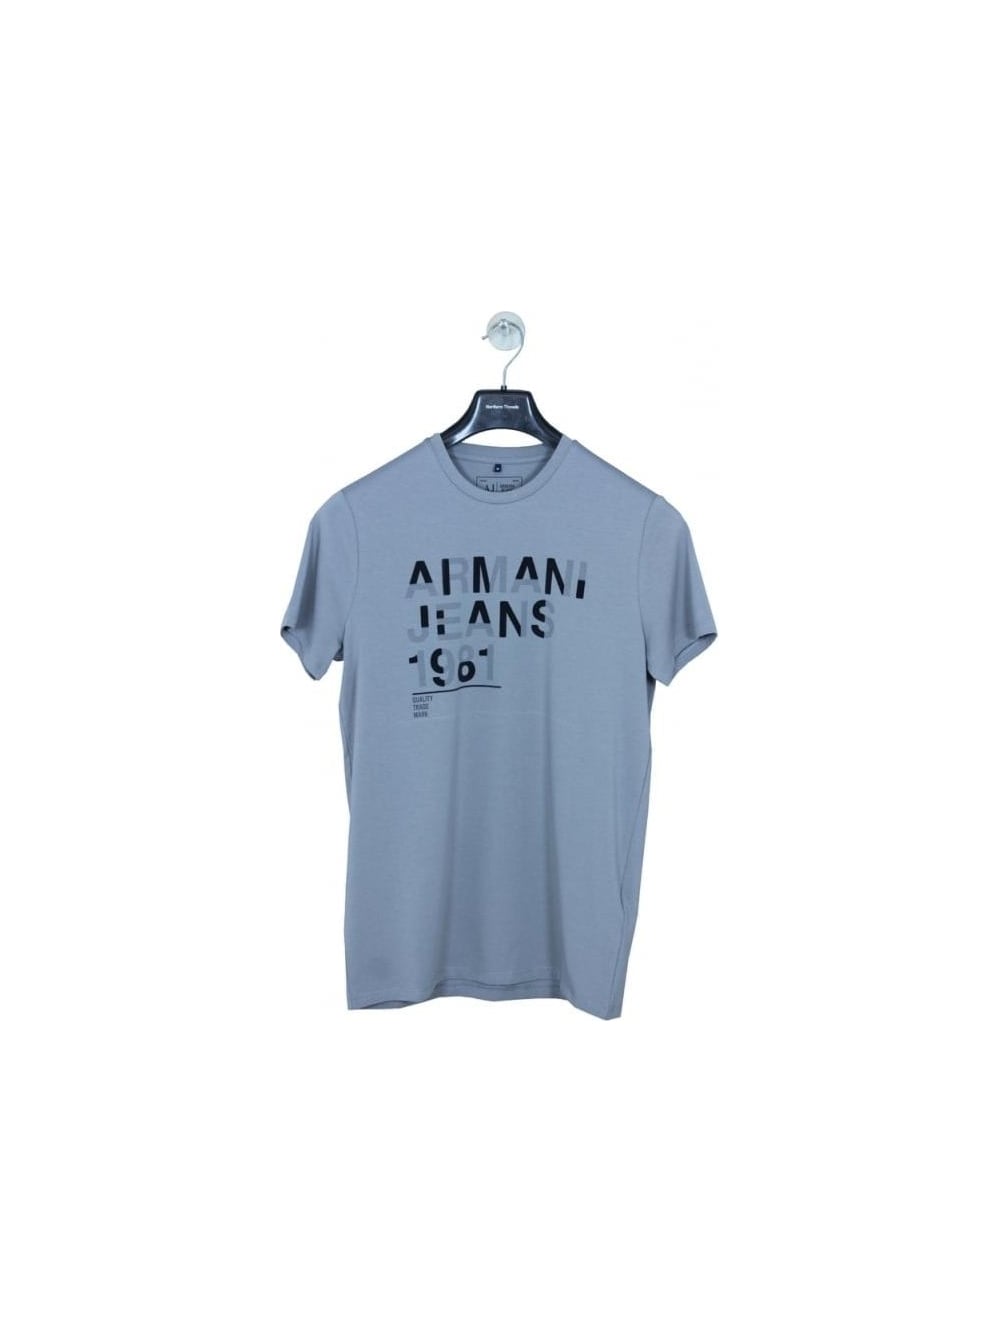 Flock Logo - Armani Jeans Half Print Flock Logo T Shirt in Grey - Northern Threads